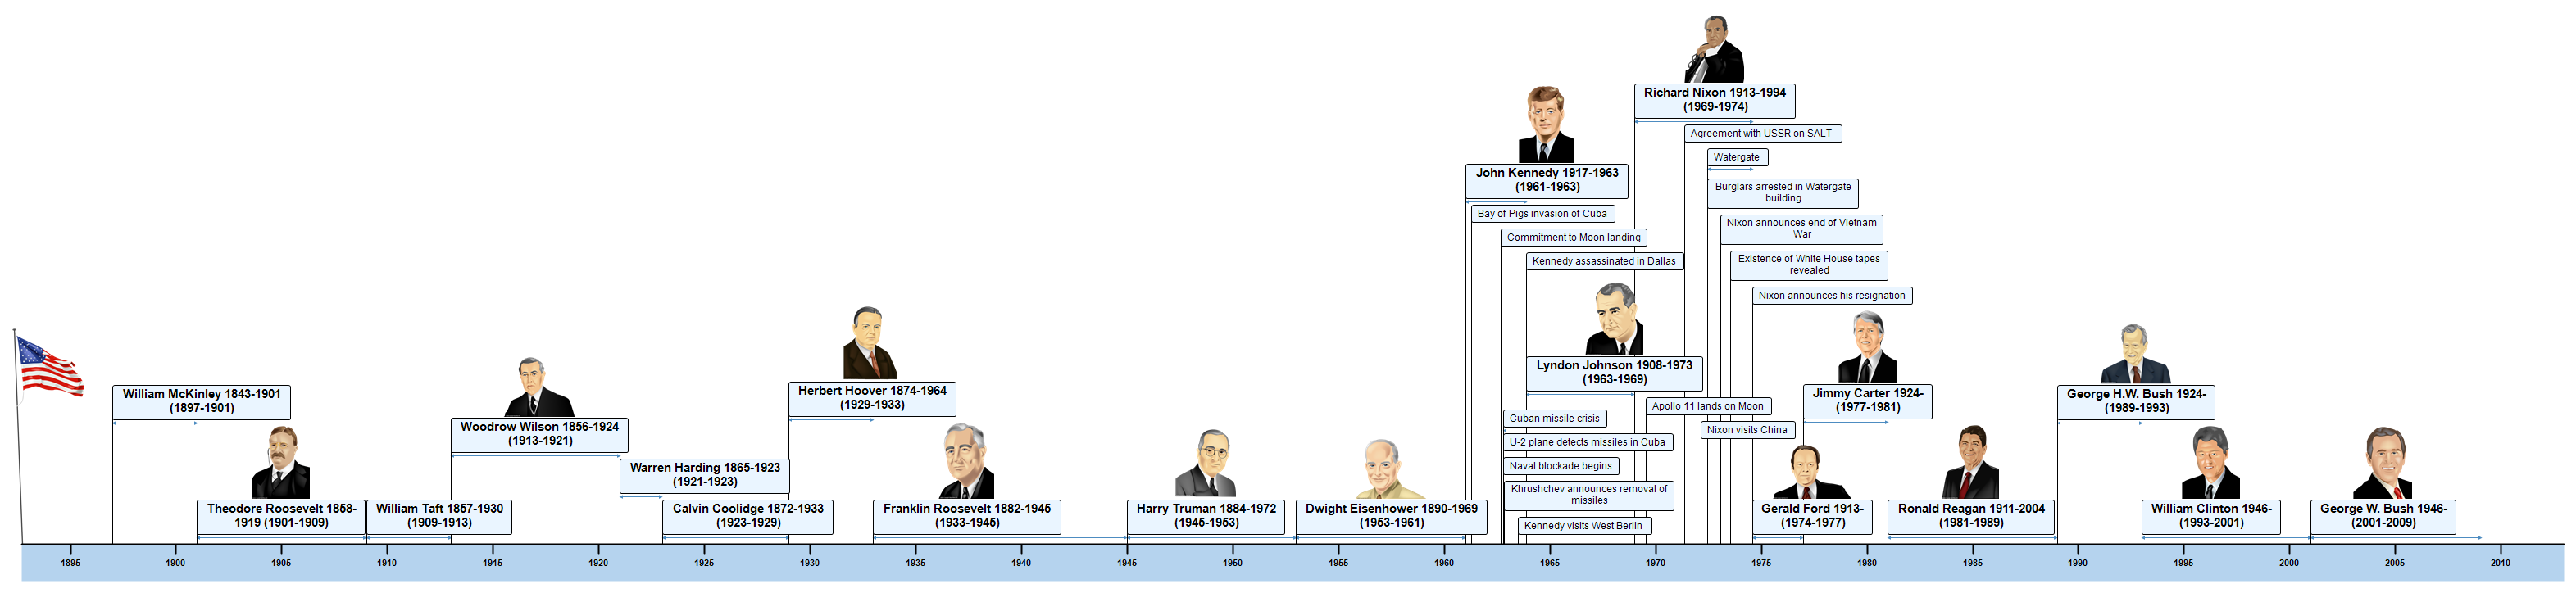 U.S. Presidents from 1900 Timeline